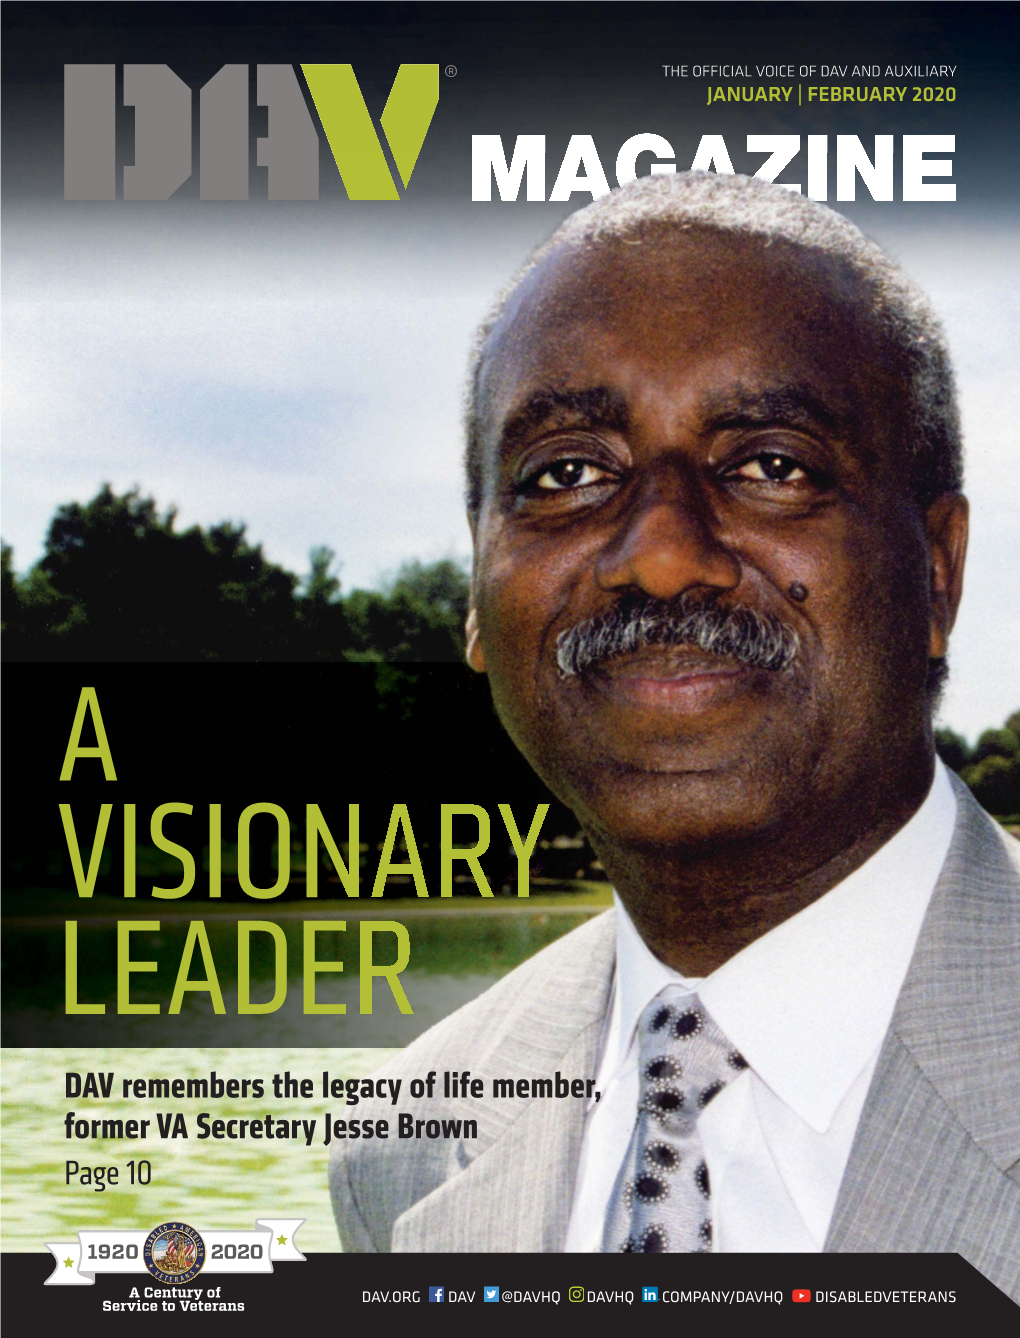 DAV Remembers the Legacy of Life Member, Former VA Secretary Jesse Brown Page 10